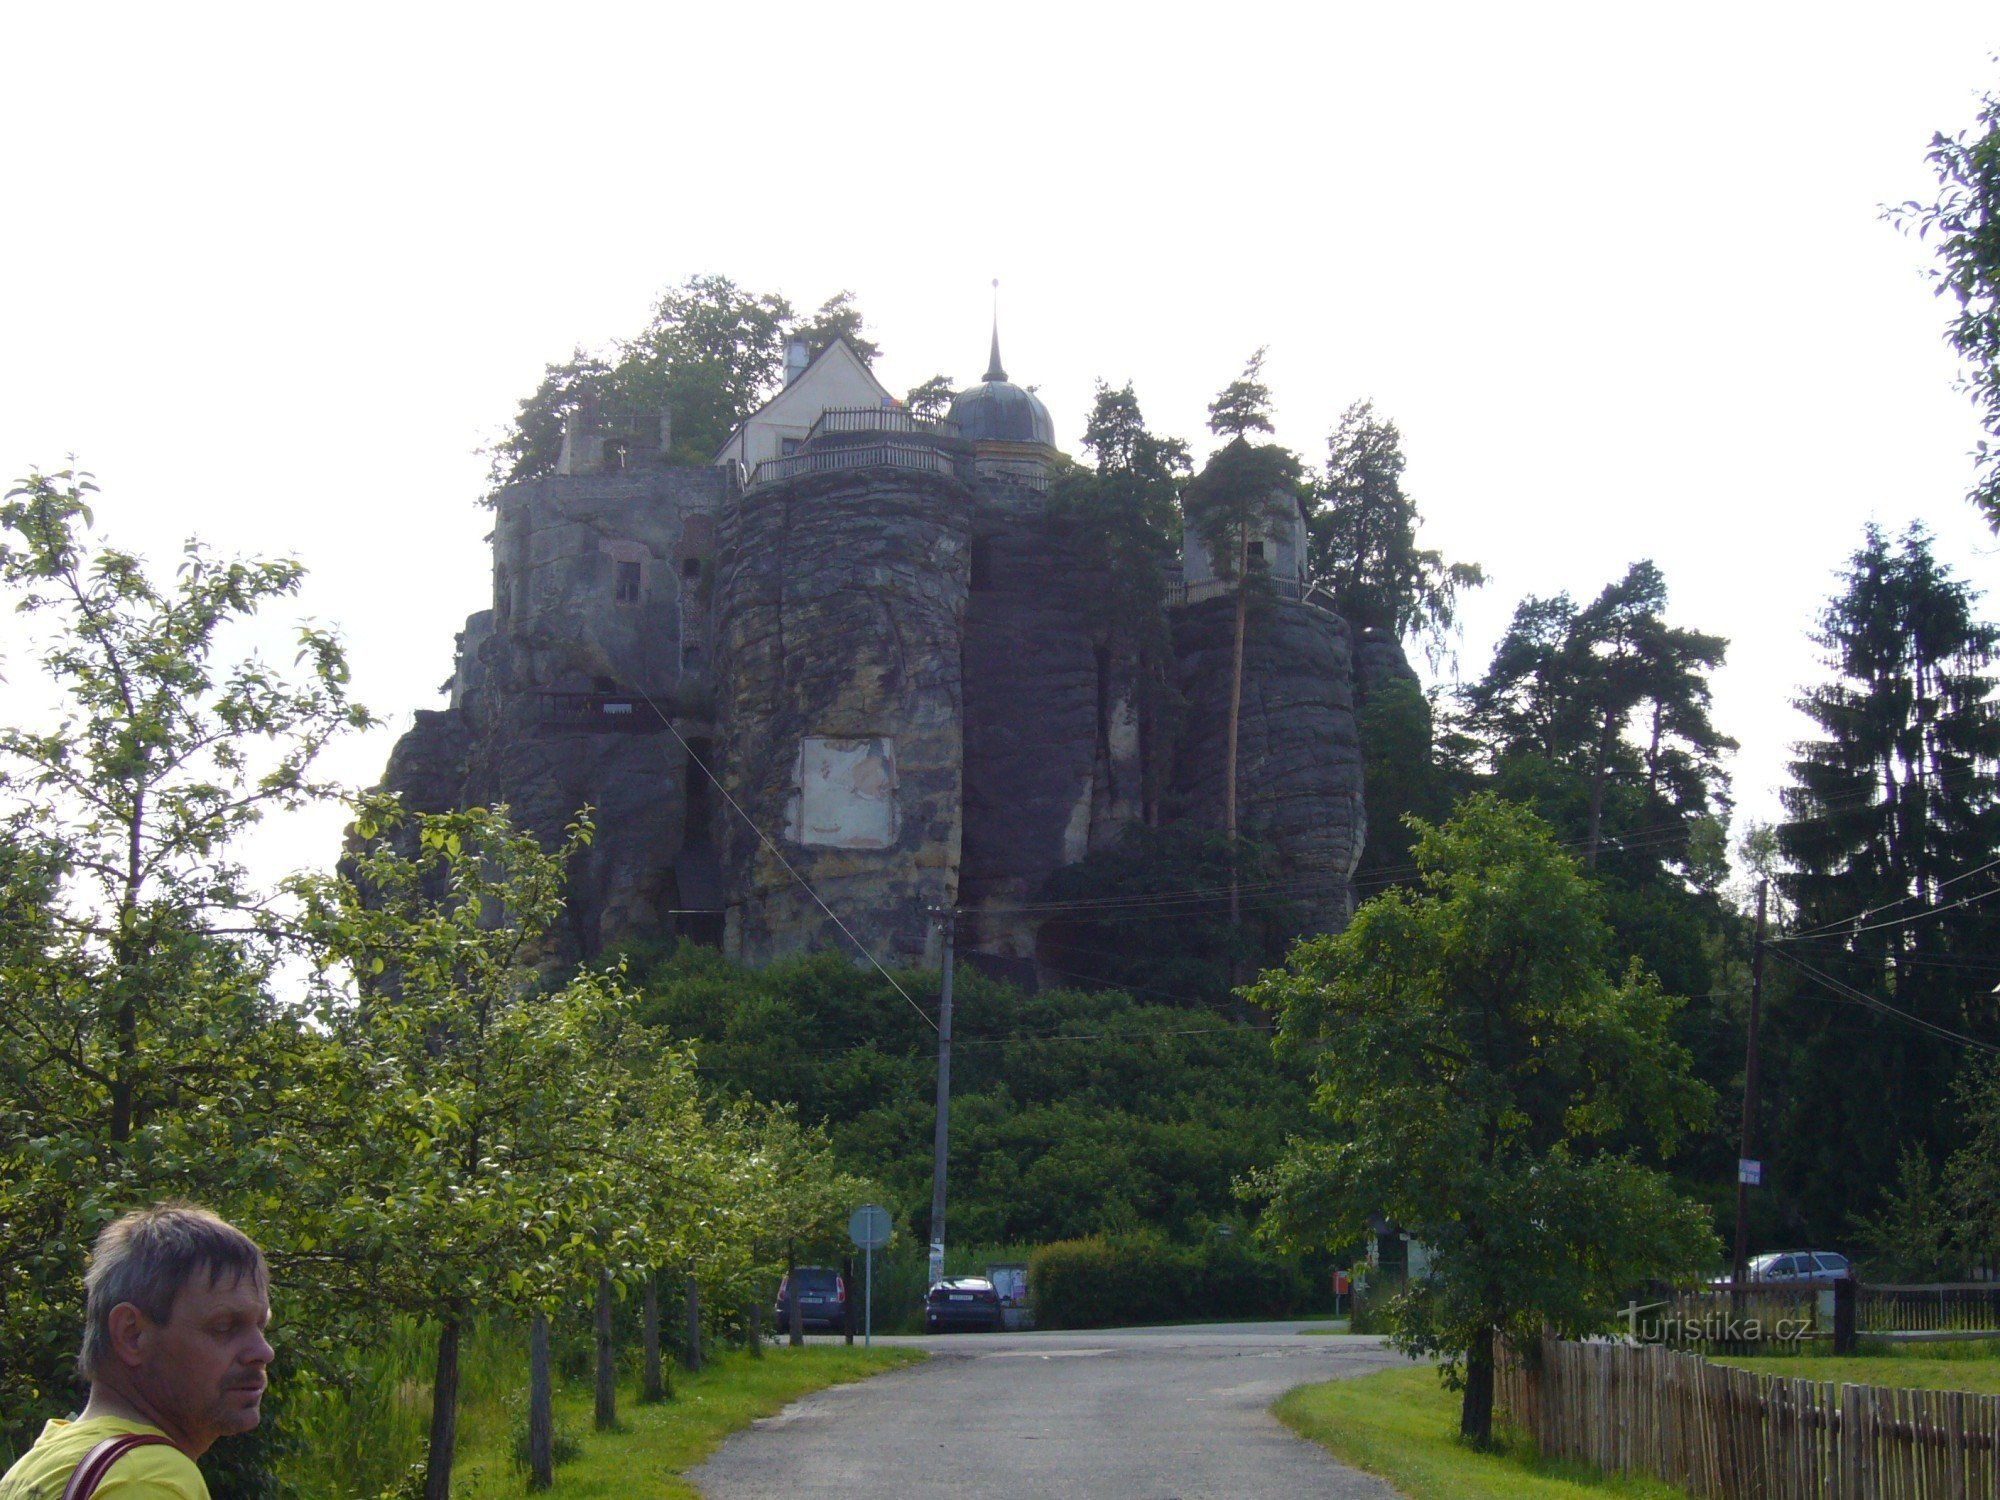 Sloup rock castle